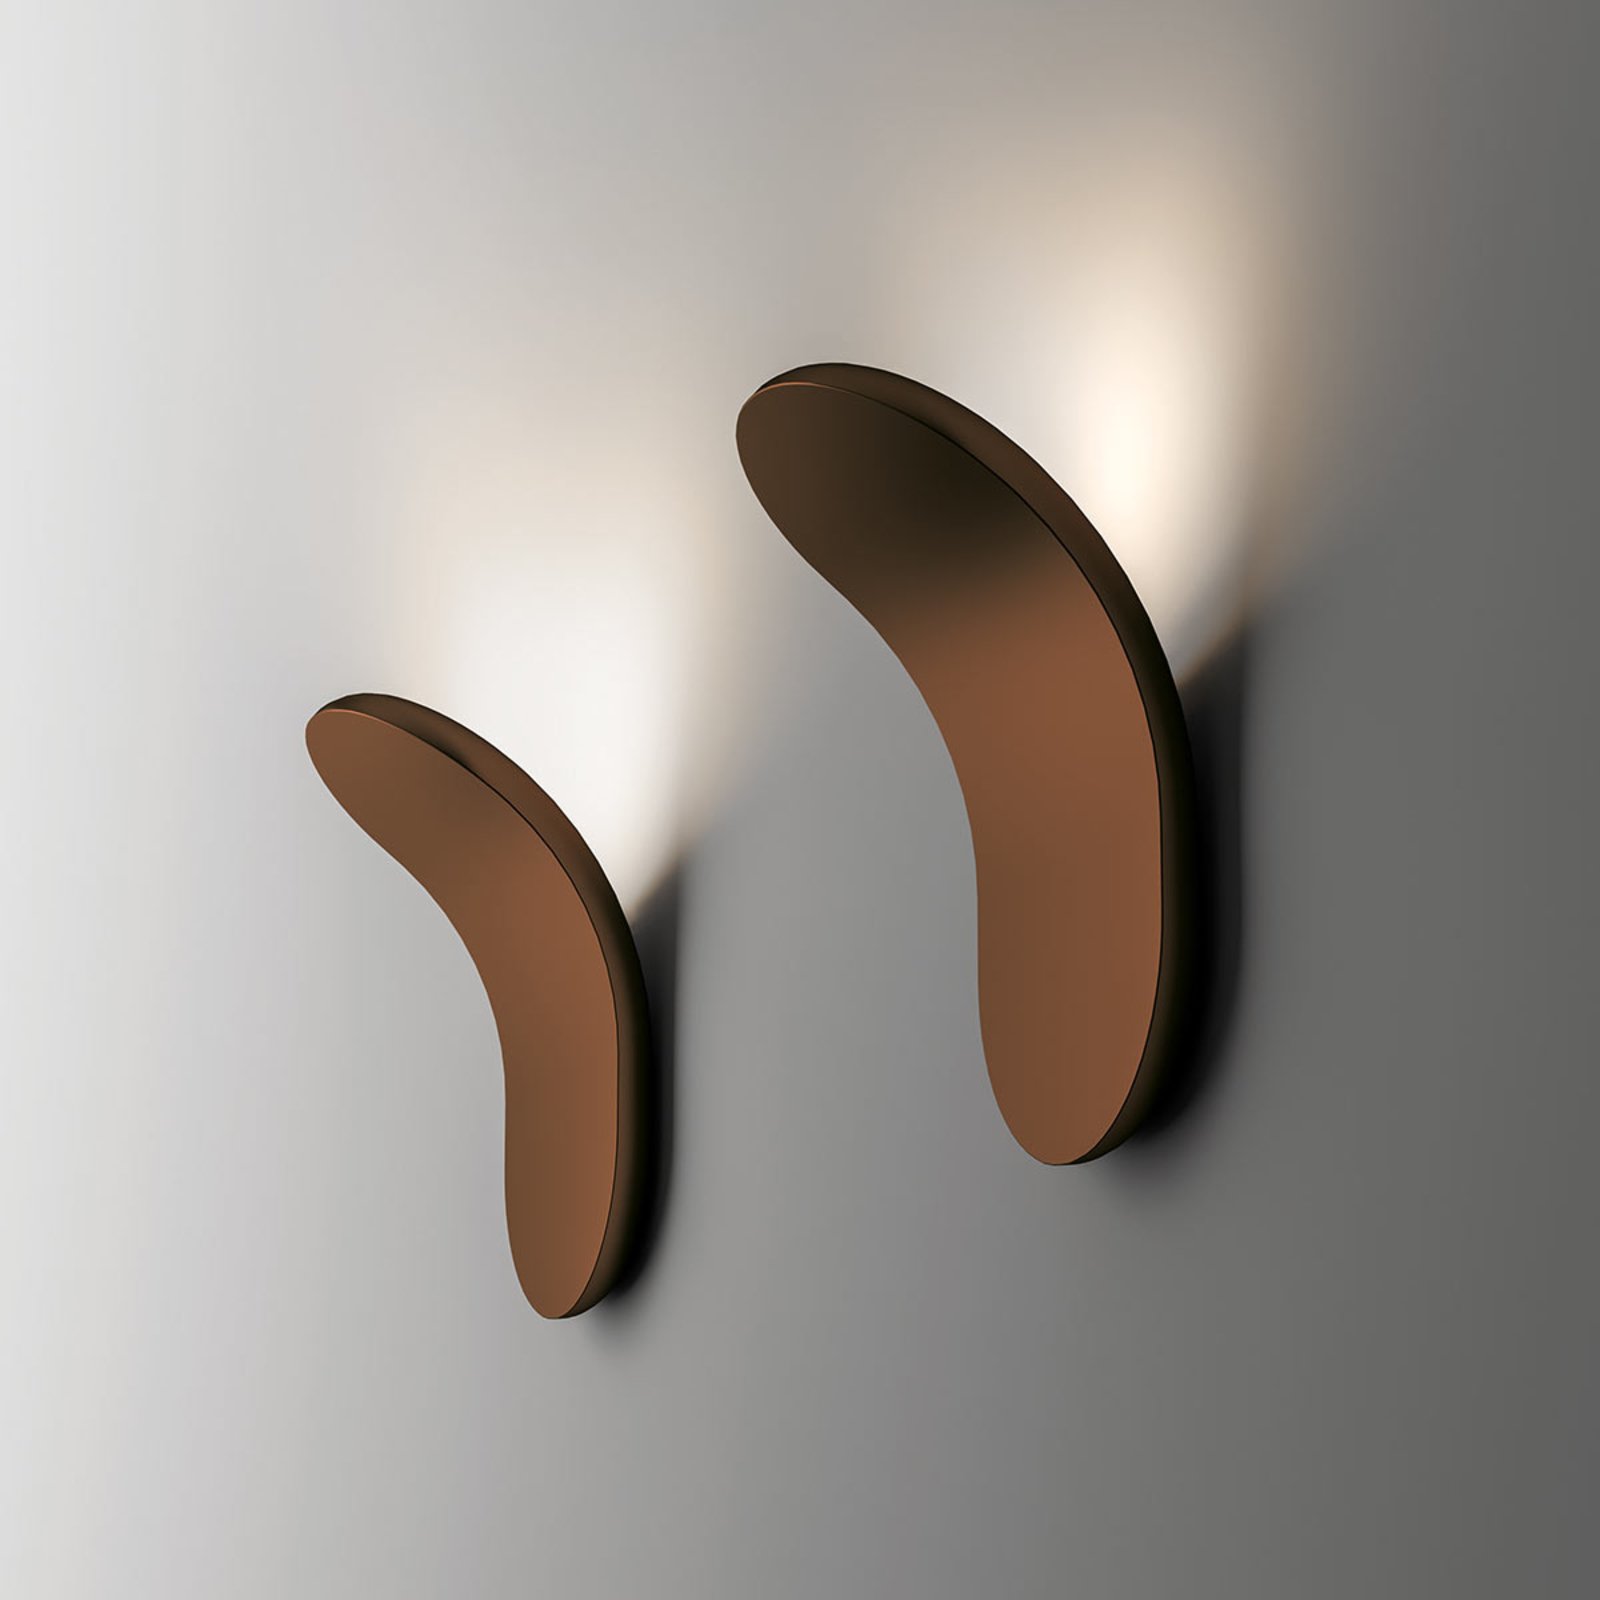 Axolight Lik LED wall light matt bronze